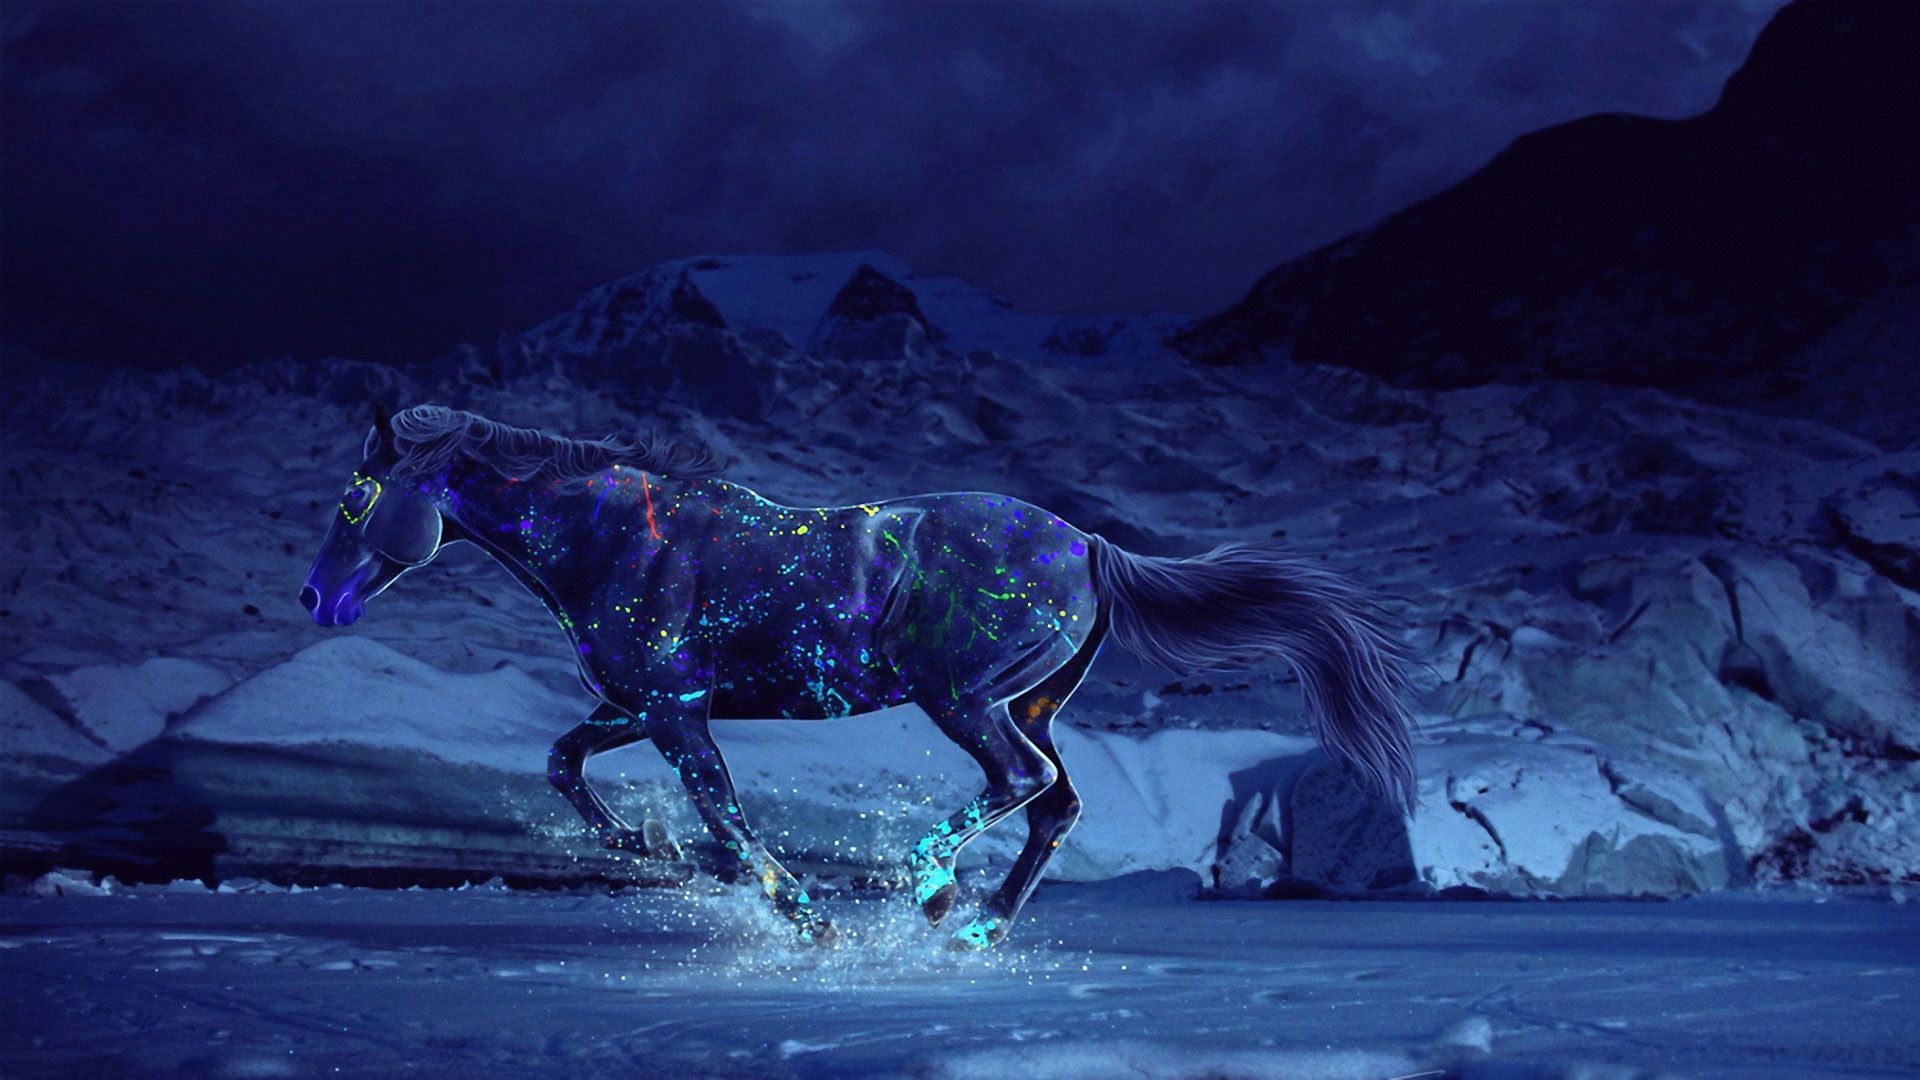 HD pics photo 3D horse neon color splash animals HD quality desktop background wallpaper. Horse wallpaper, Horse painting, Horses